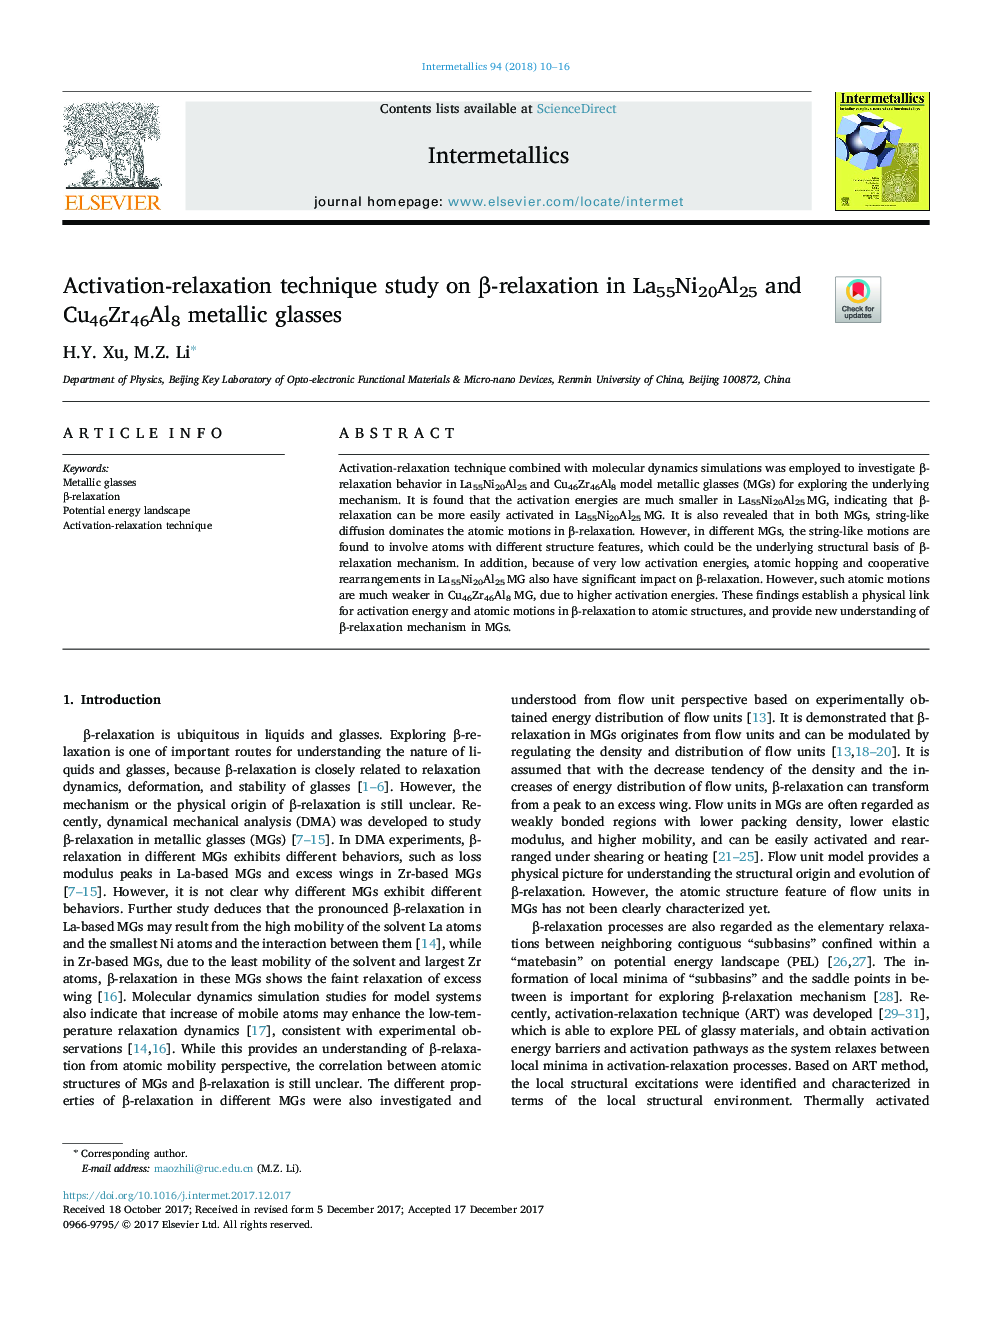 Activation-relaxation technique study on Î²-relaxation in La55Ni20Al25 and Cu46Zr46Al8 metallic glasses